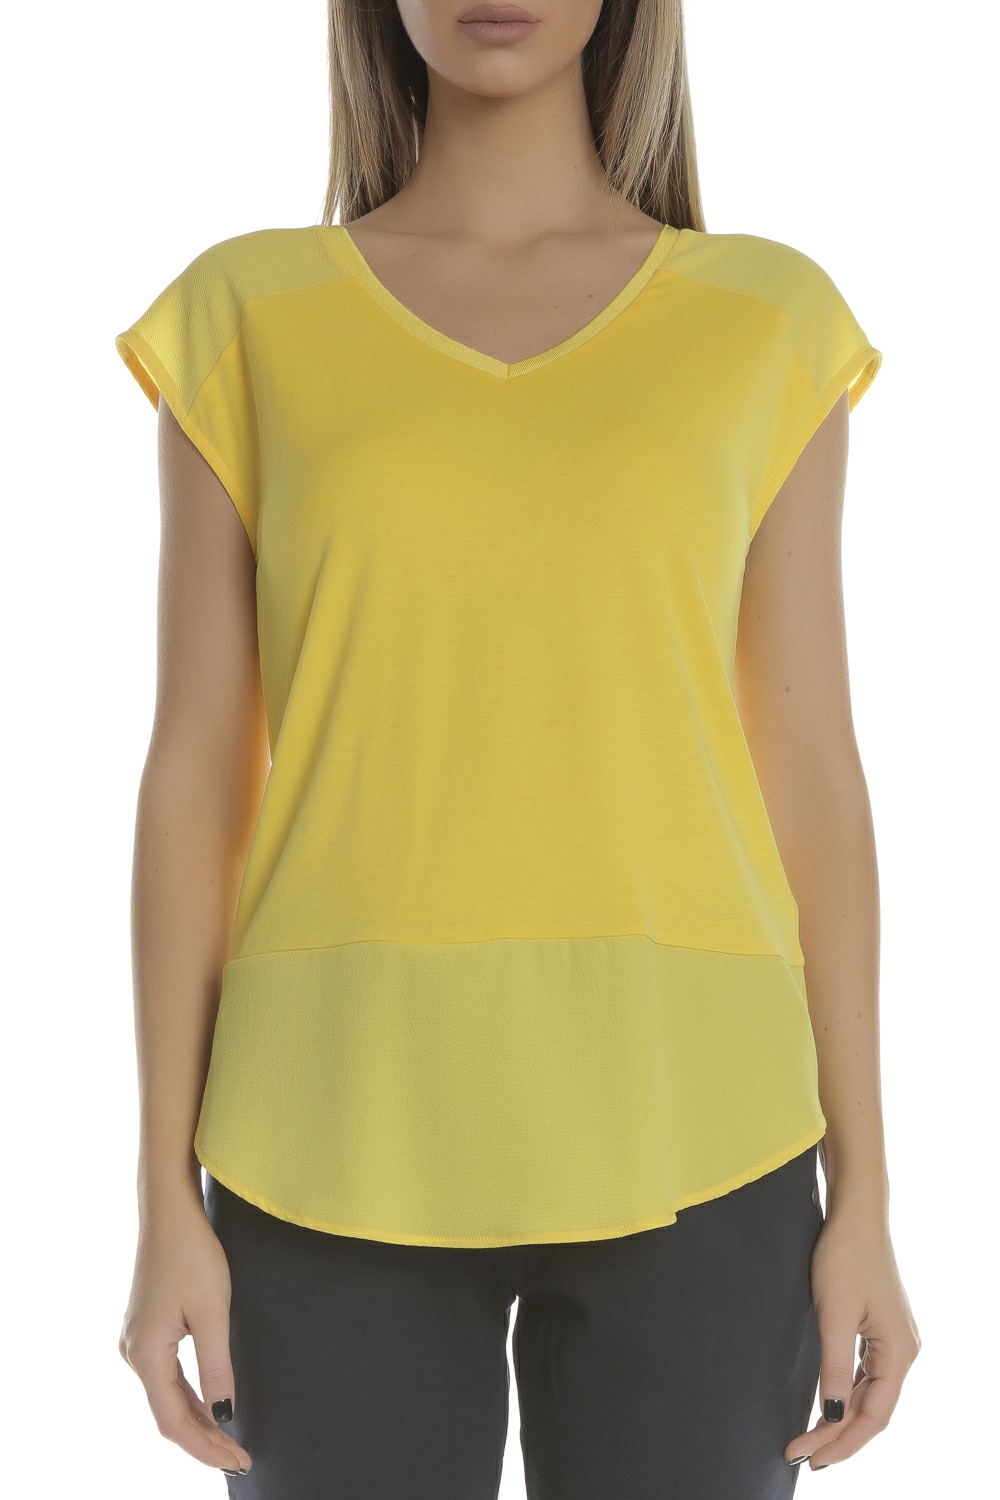 GARCIA JEANS - Γυναικεία κοντομάνικη μπλούζα GARCIA JEANS κίτρινη Γυναικεία/Ρούχα/Μπλούζες/Κοντομάνικες